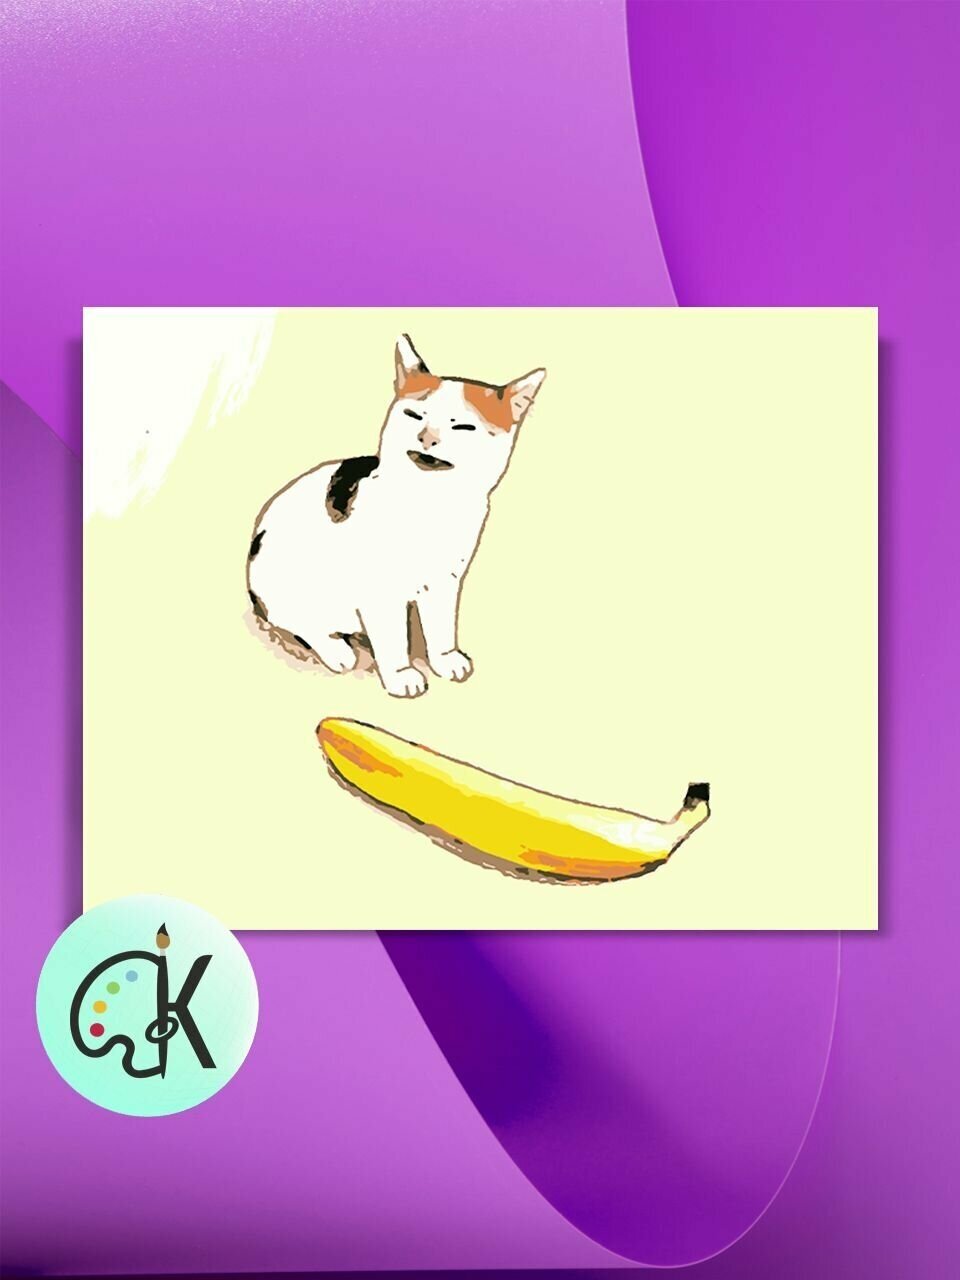 Картина по номерам на холсте Кот и банан 2, 40 х 40 см